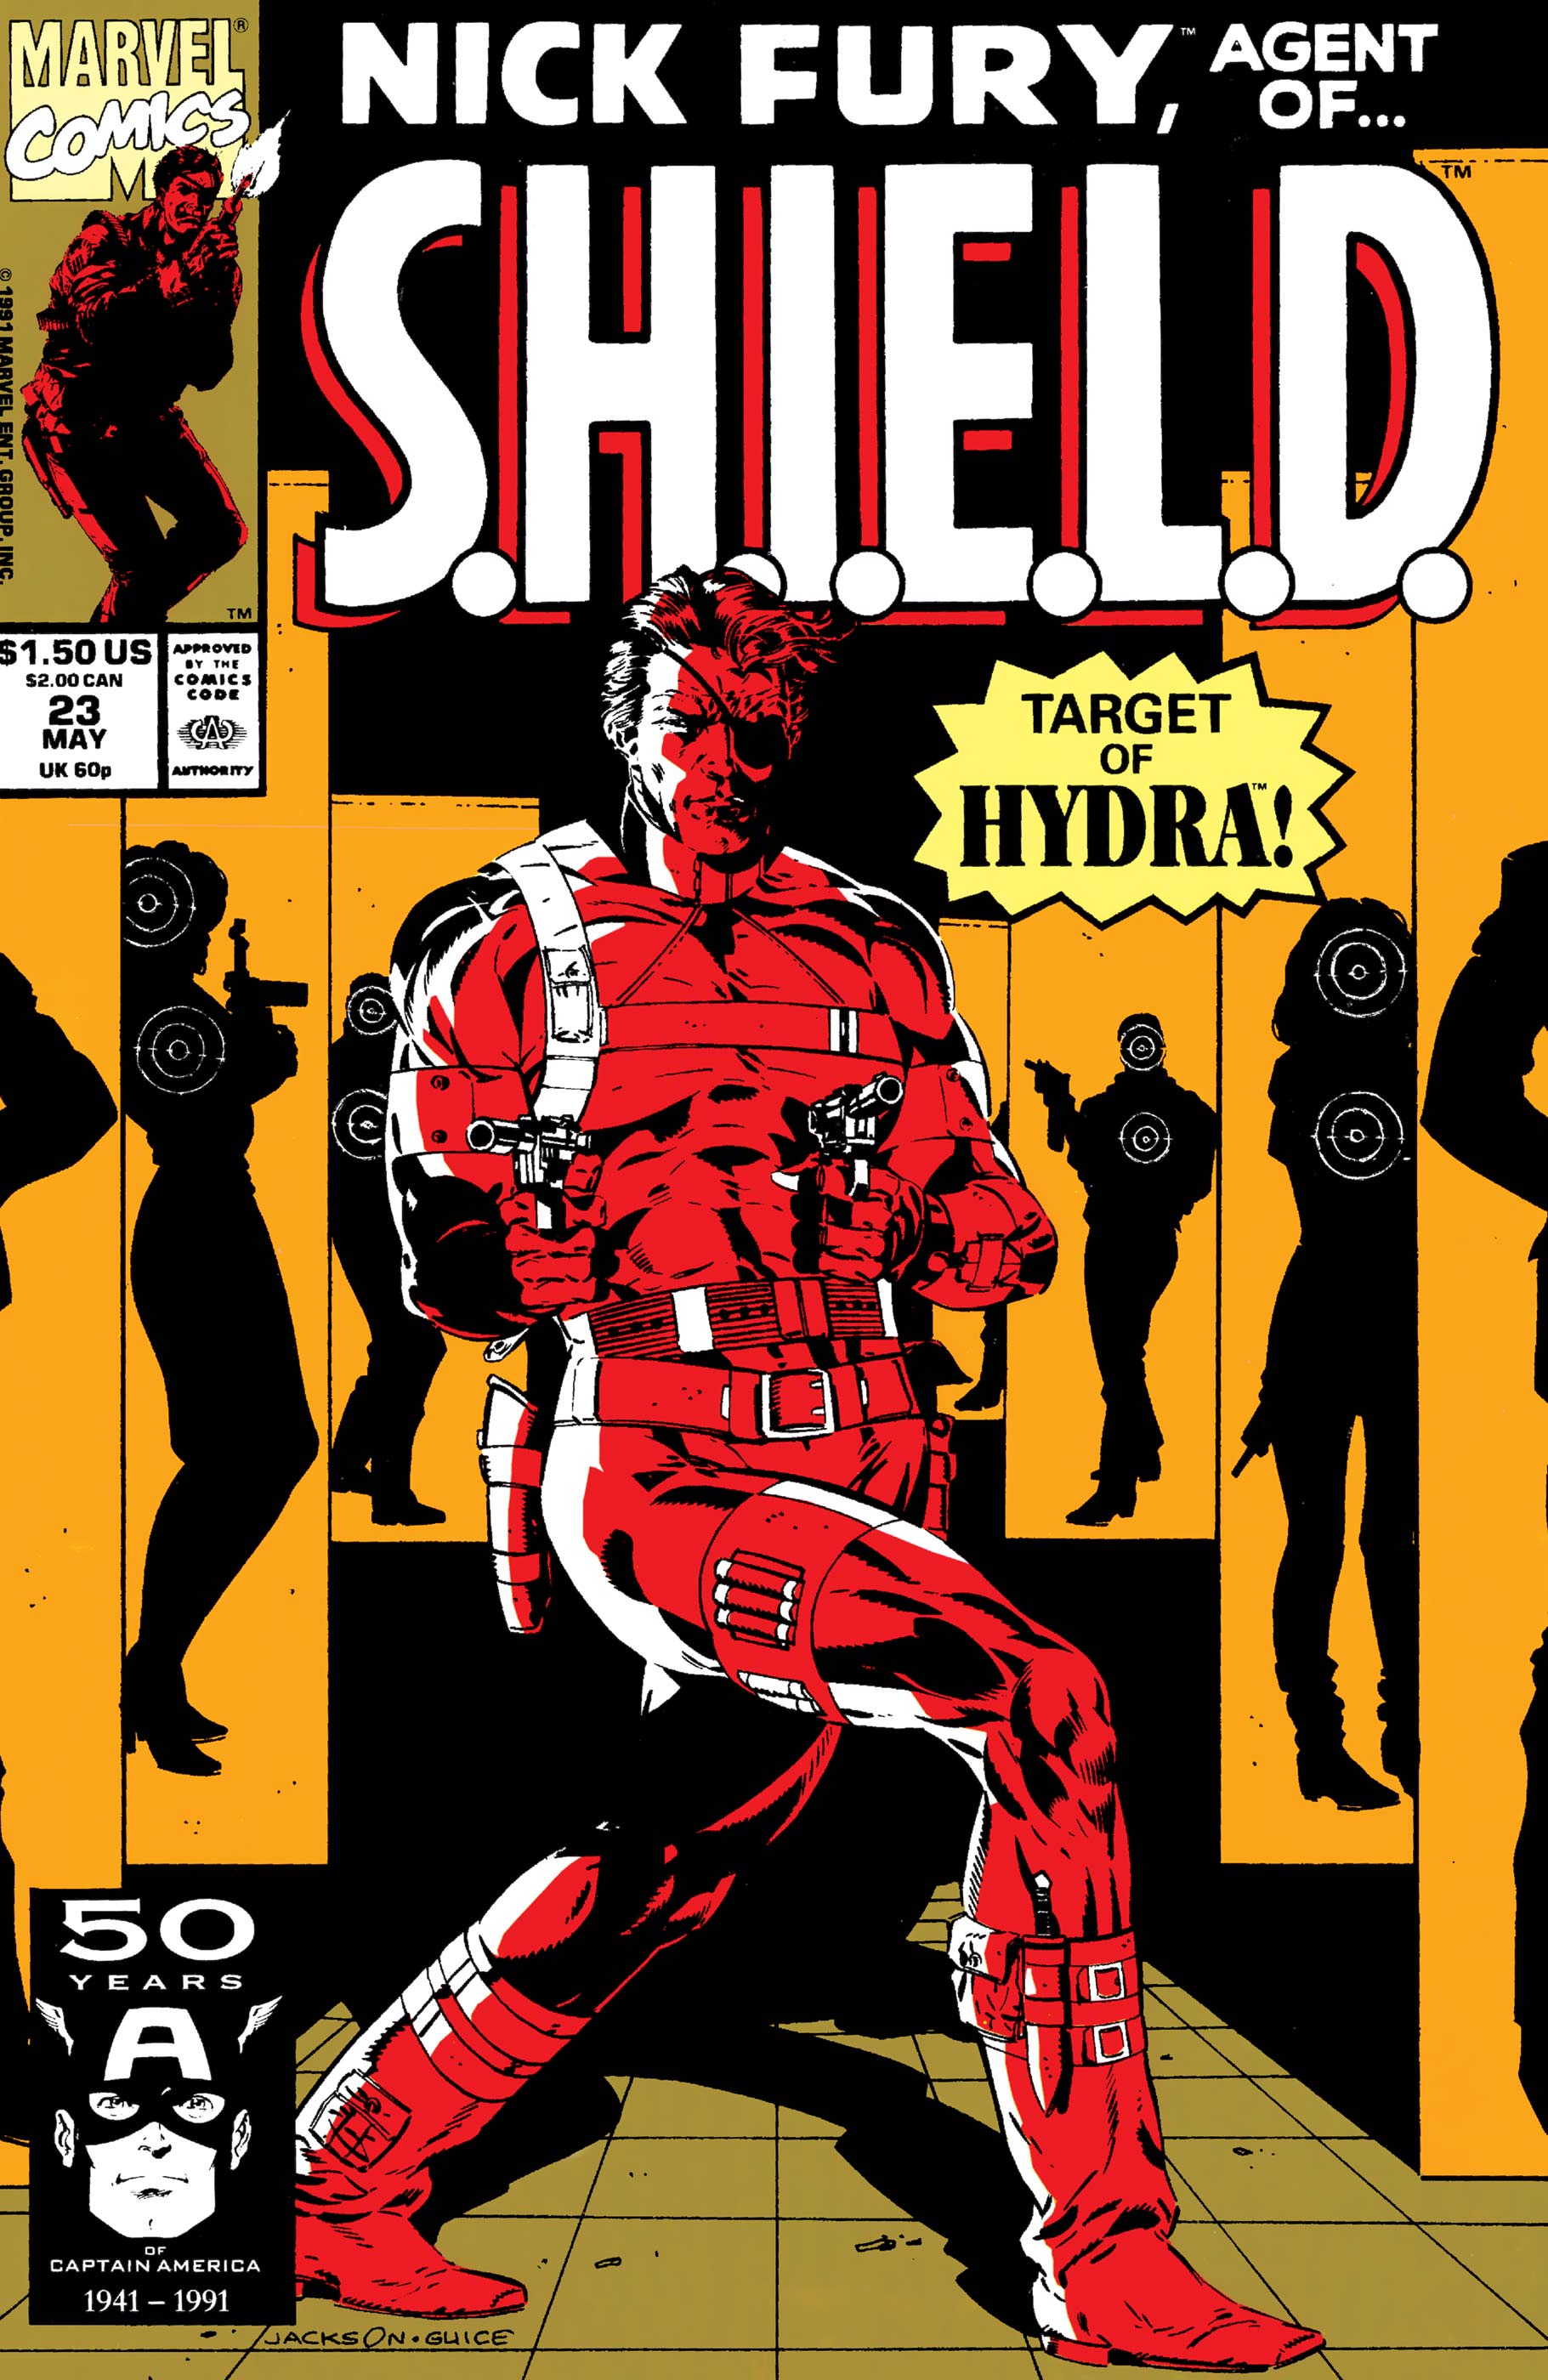 Nick Fury, Agent of S.H.I.E.L.D. (1989) #23